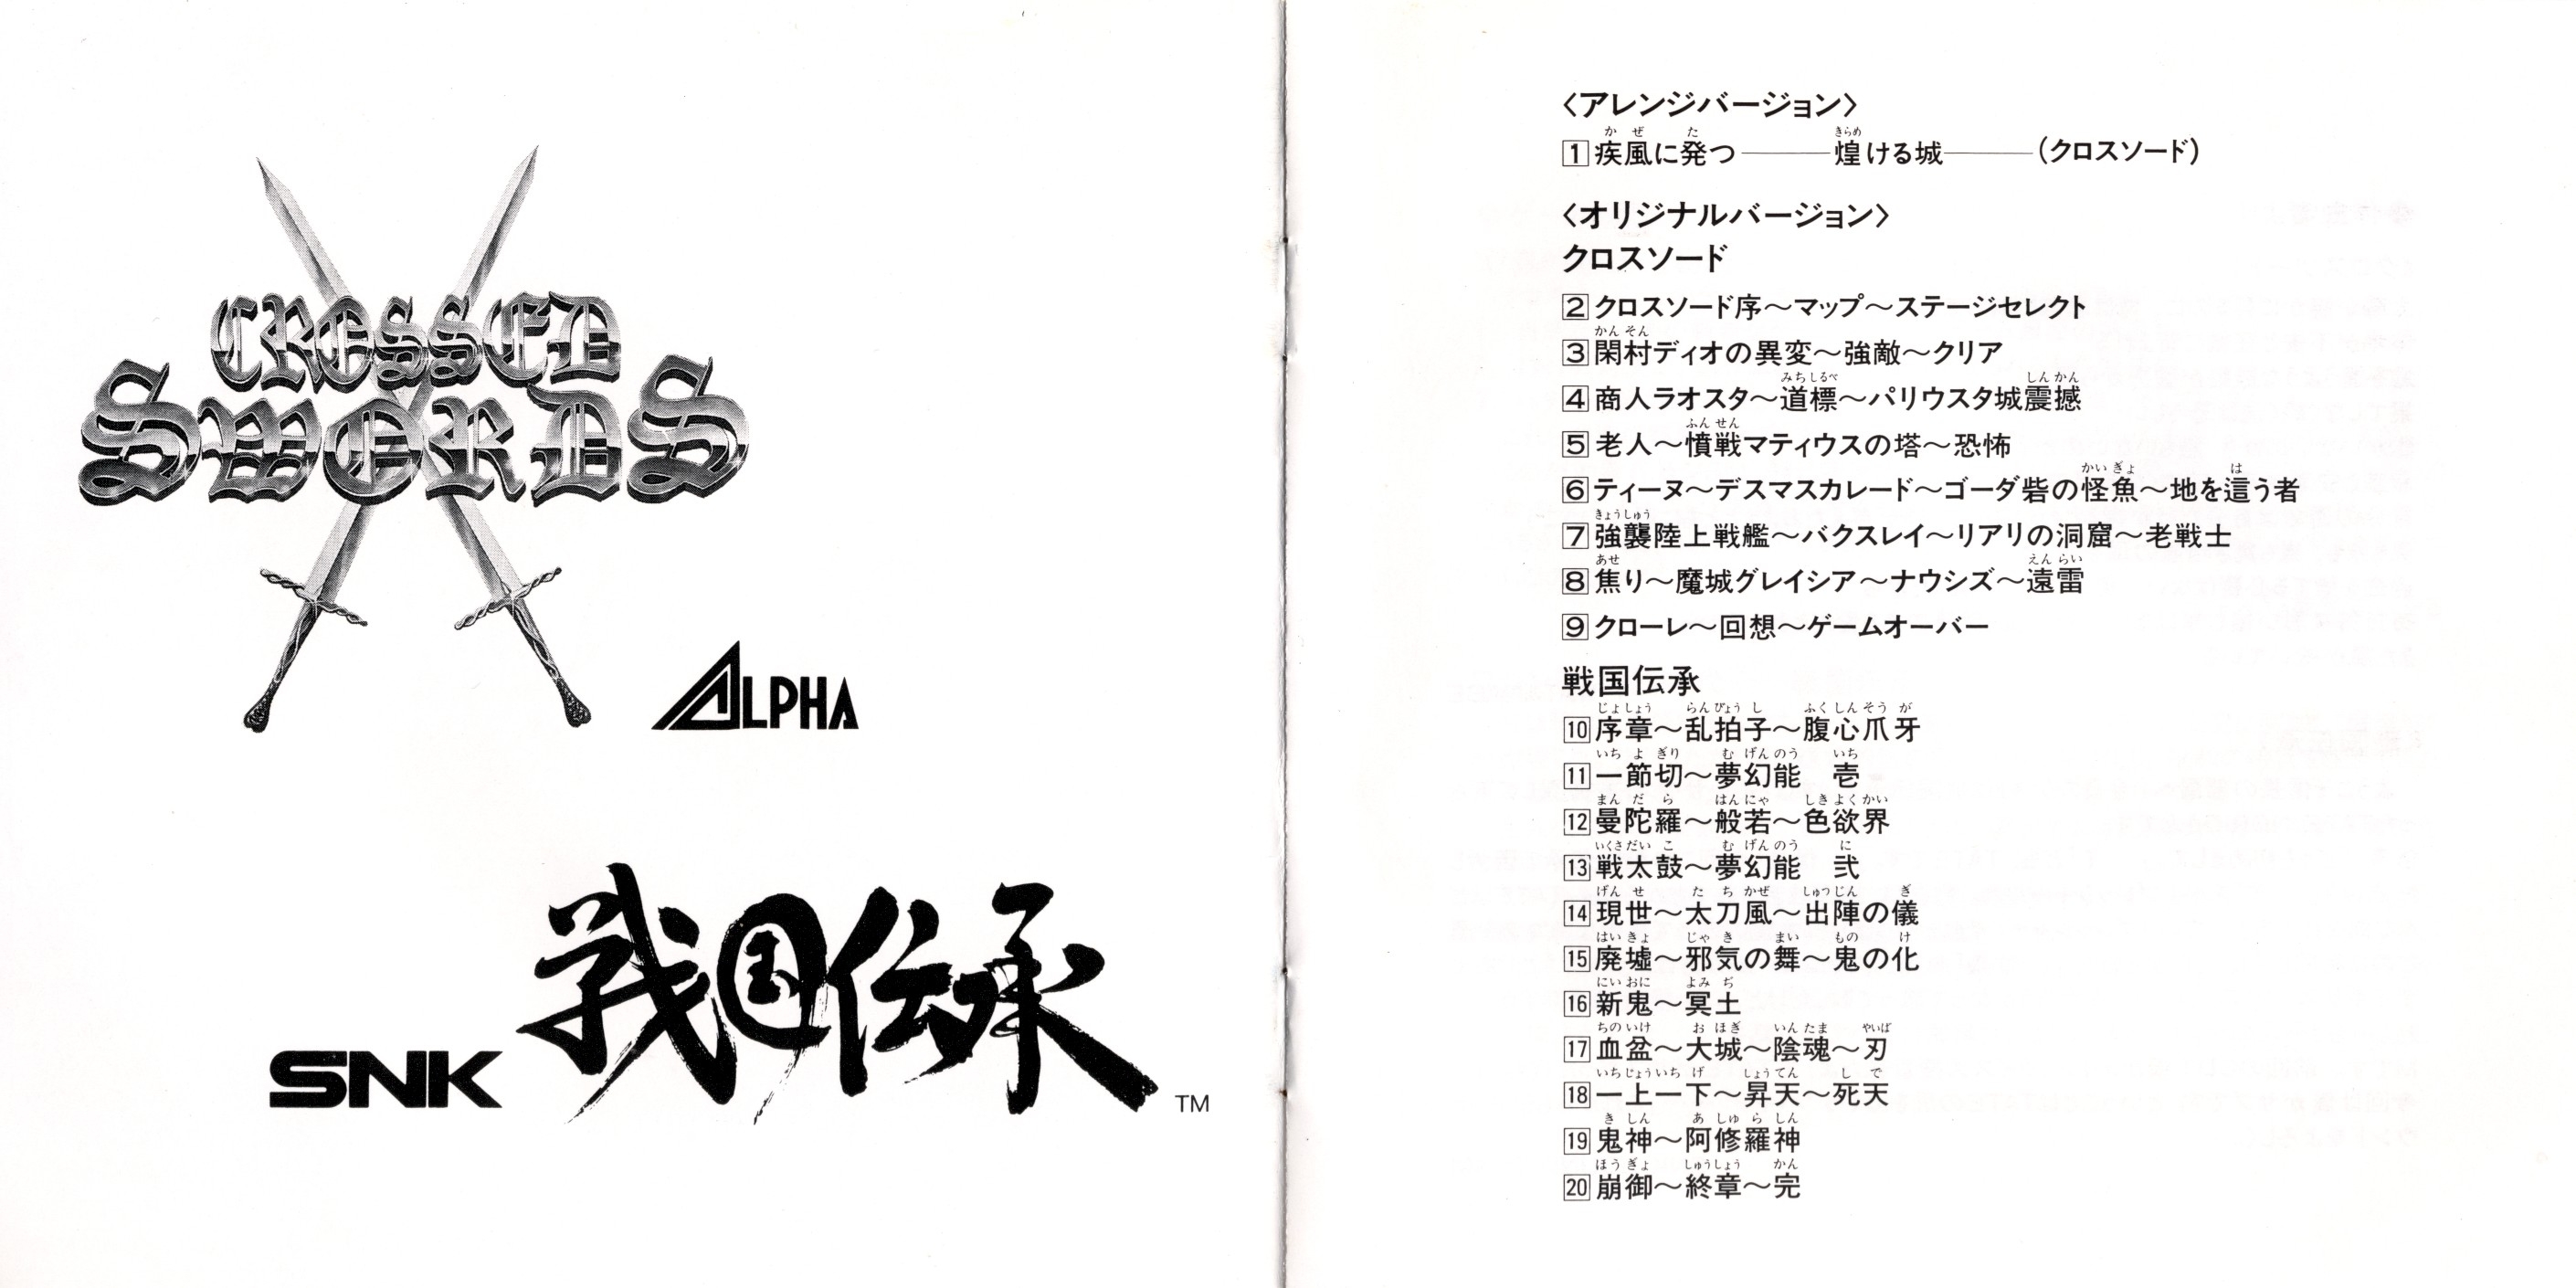 Crossed Swords / Sengoku Densyo (1991) MP3 - Download Crossed Swords /  Sengoku Densyo (1991) Soundtracks for FREE!